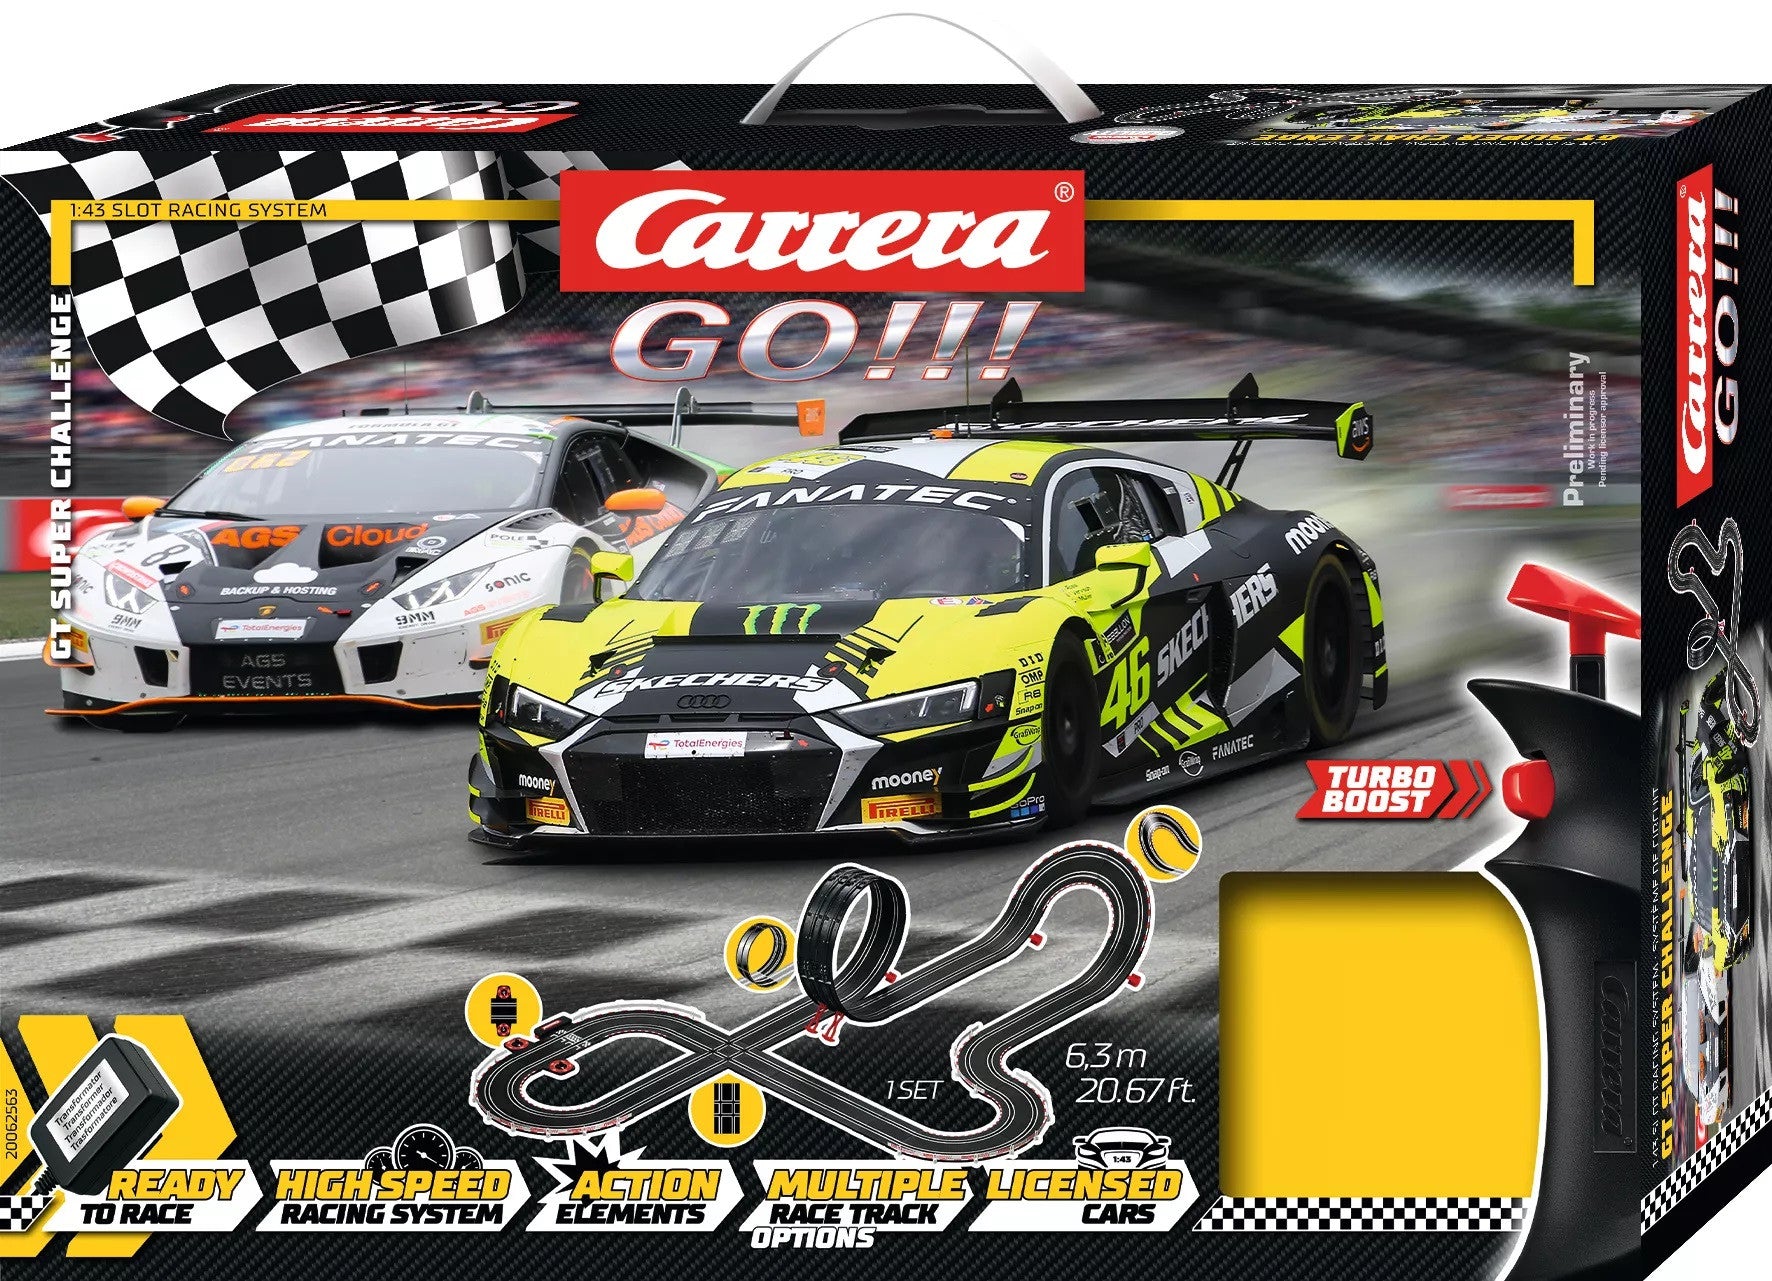 Circuit Carrera GO SUPER SPEEDERS - 20062488 - JJMstore